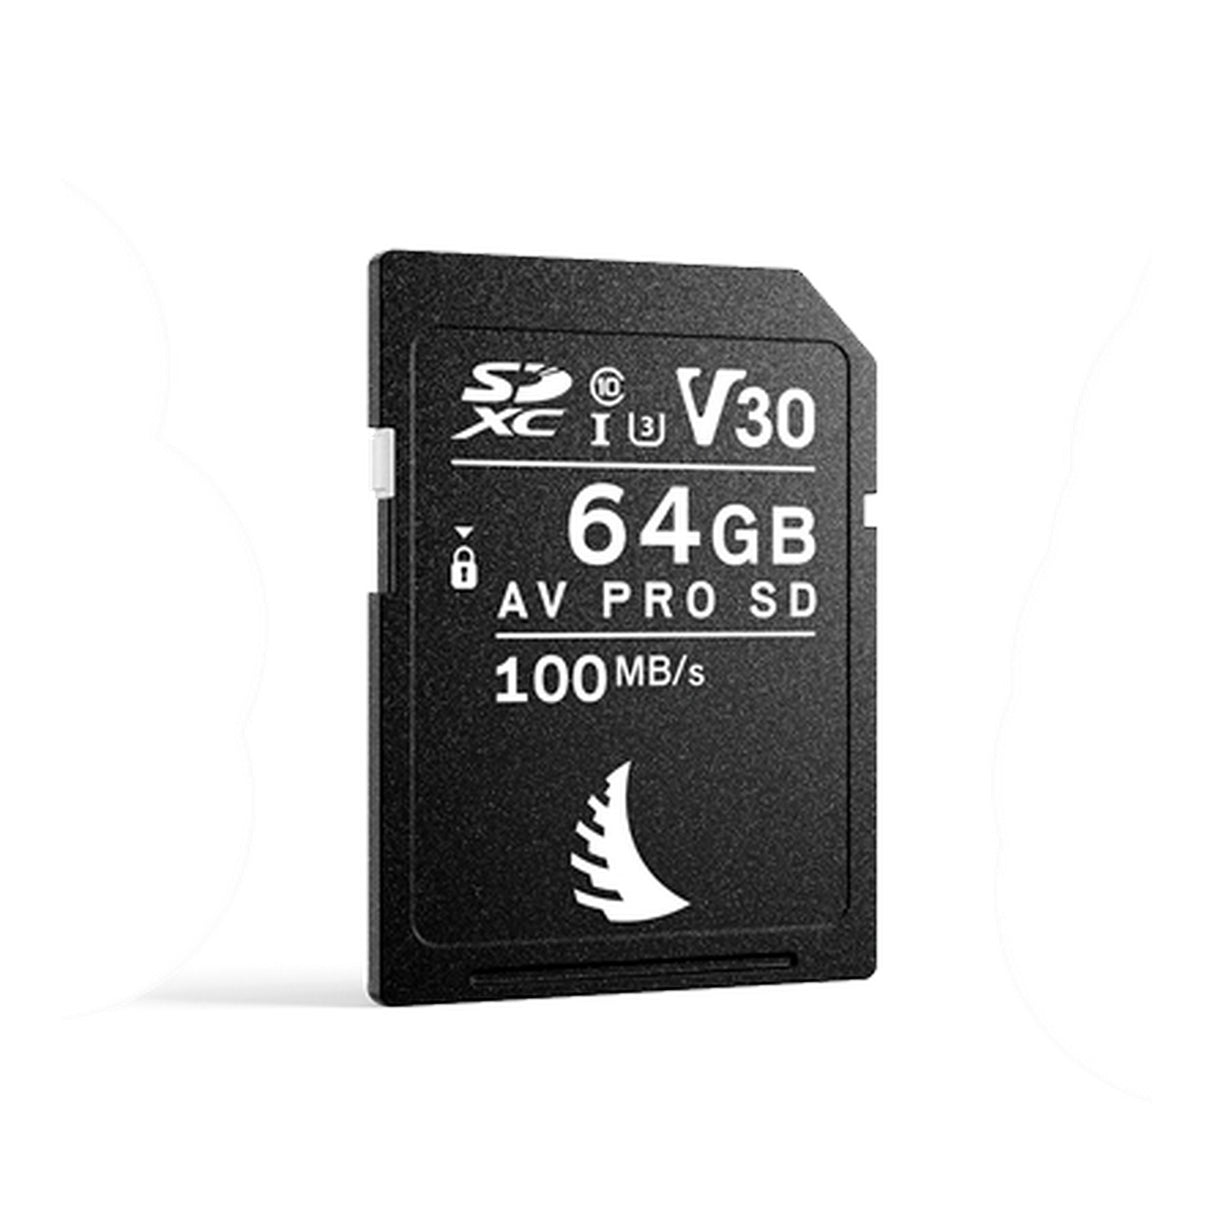 Angelbird AV PRO SD V30 SDXC UHS-I Memory Card, 64GB